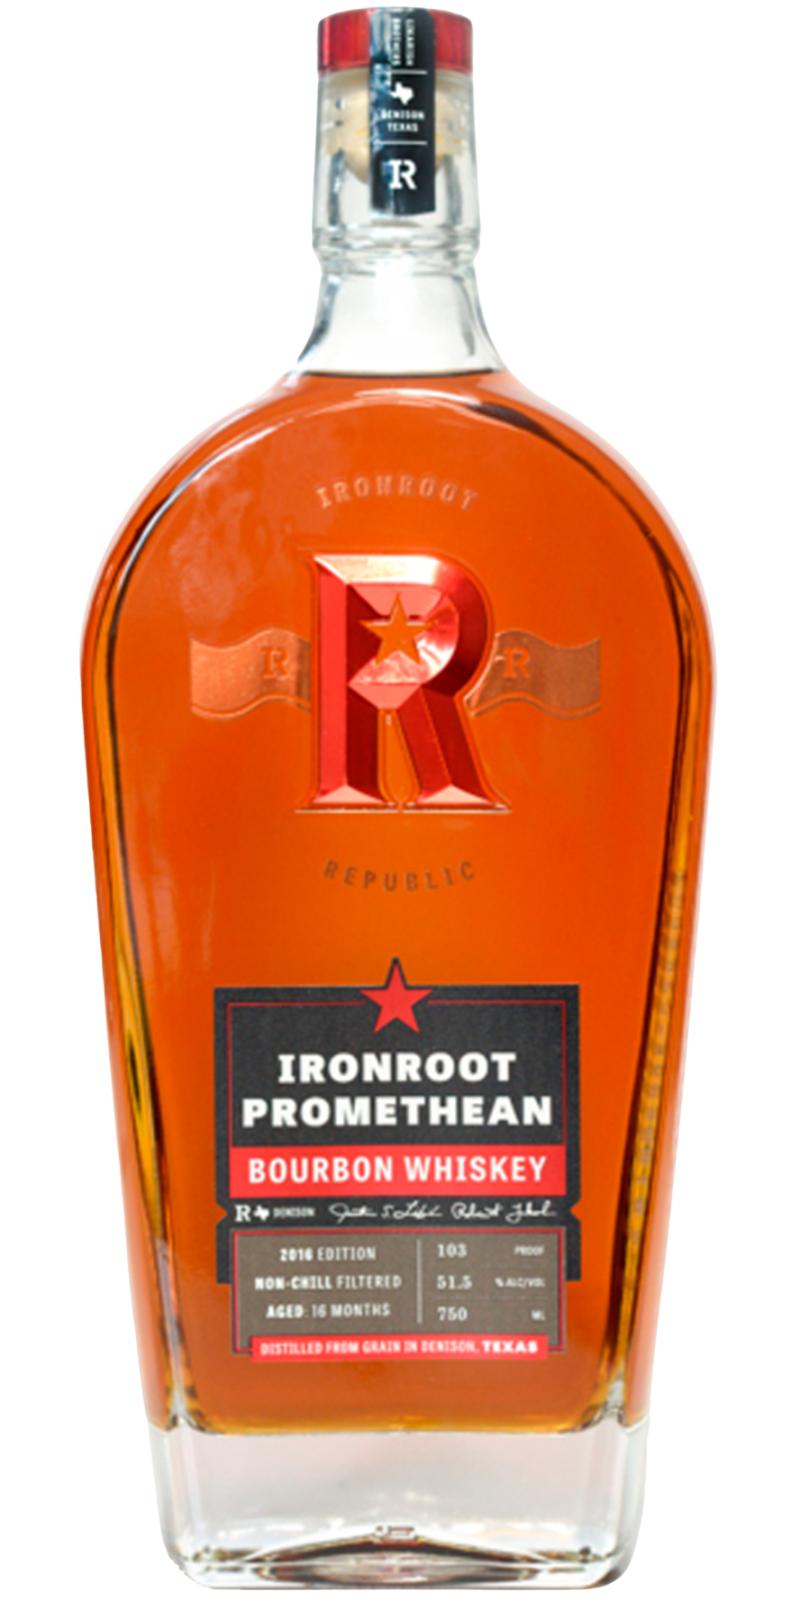 Ironroot Promethean